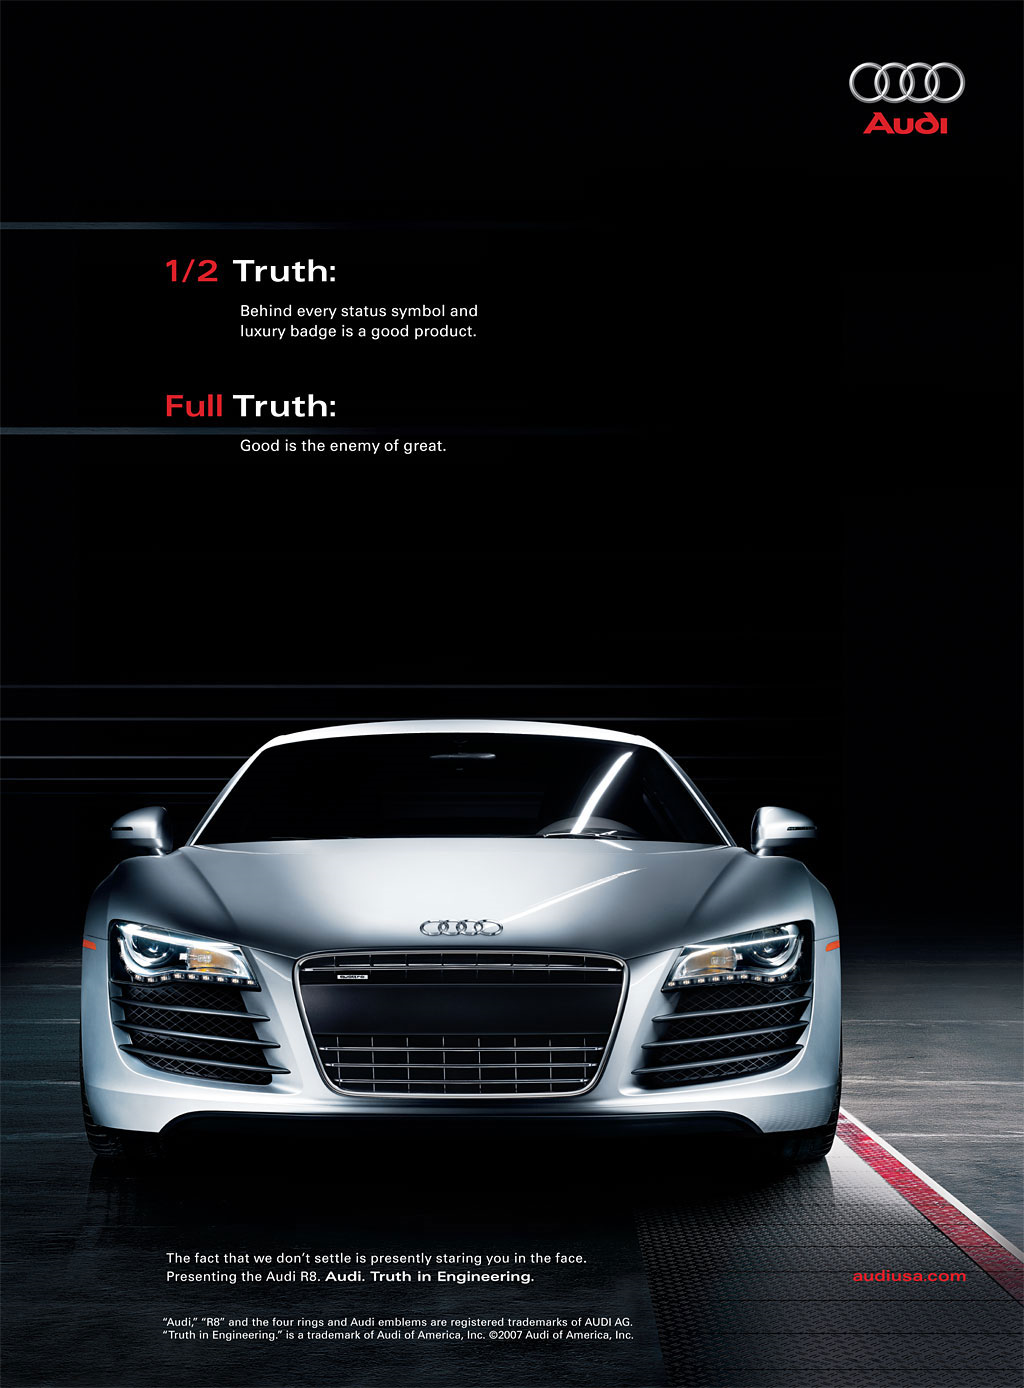 Audi RB advertisement